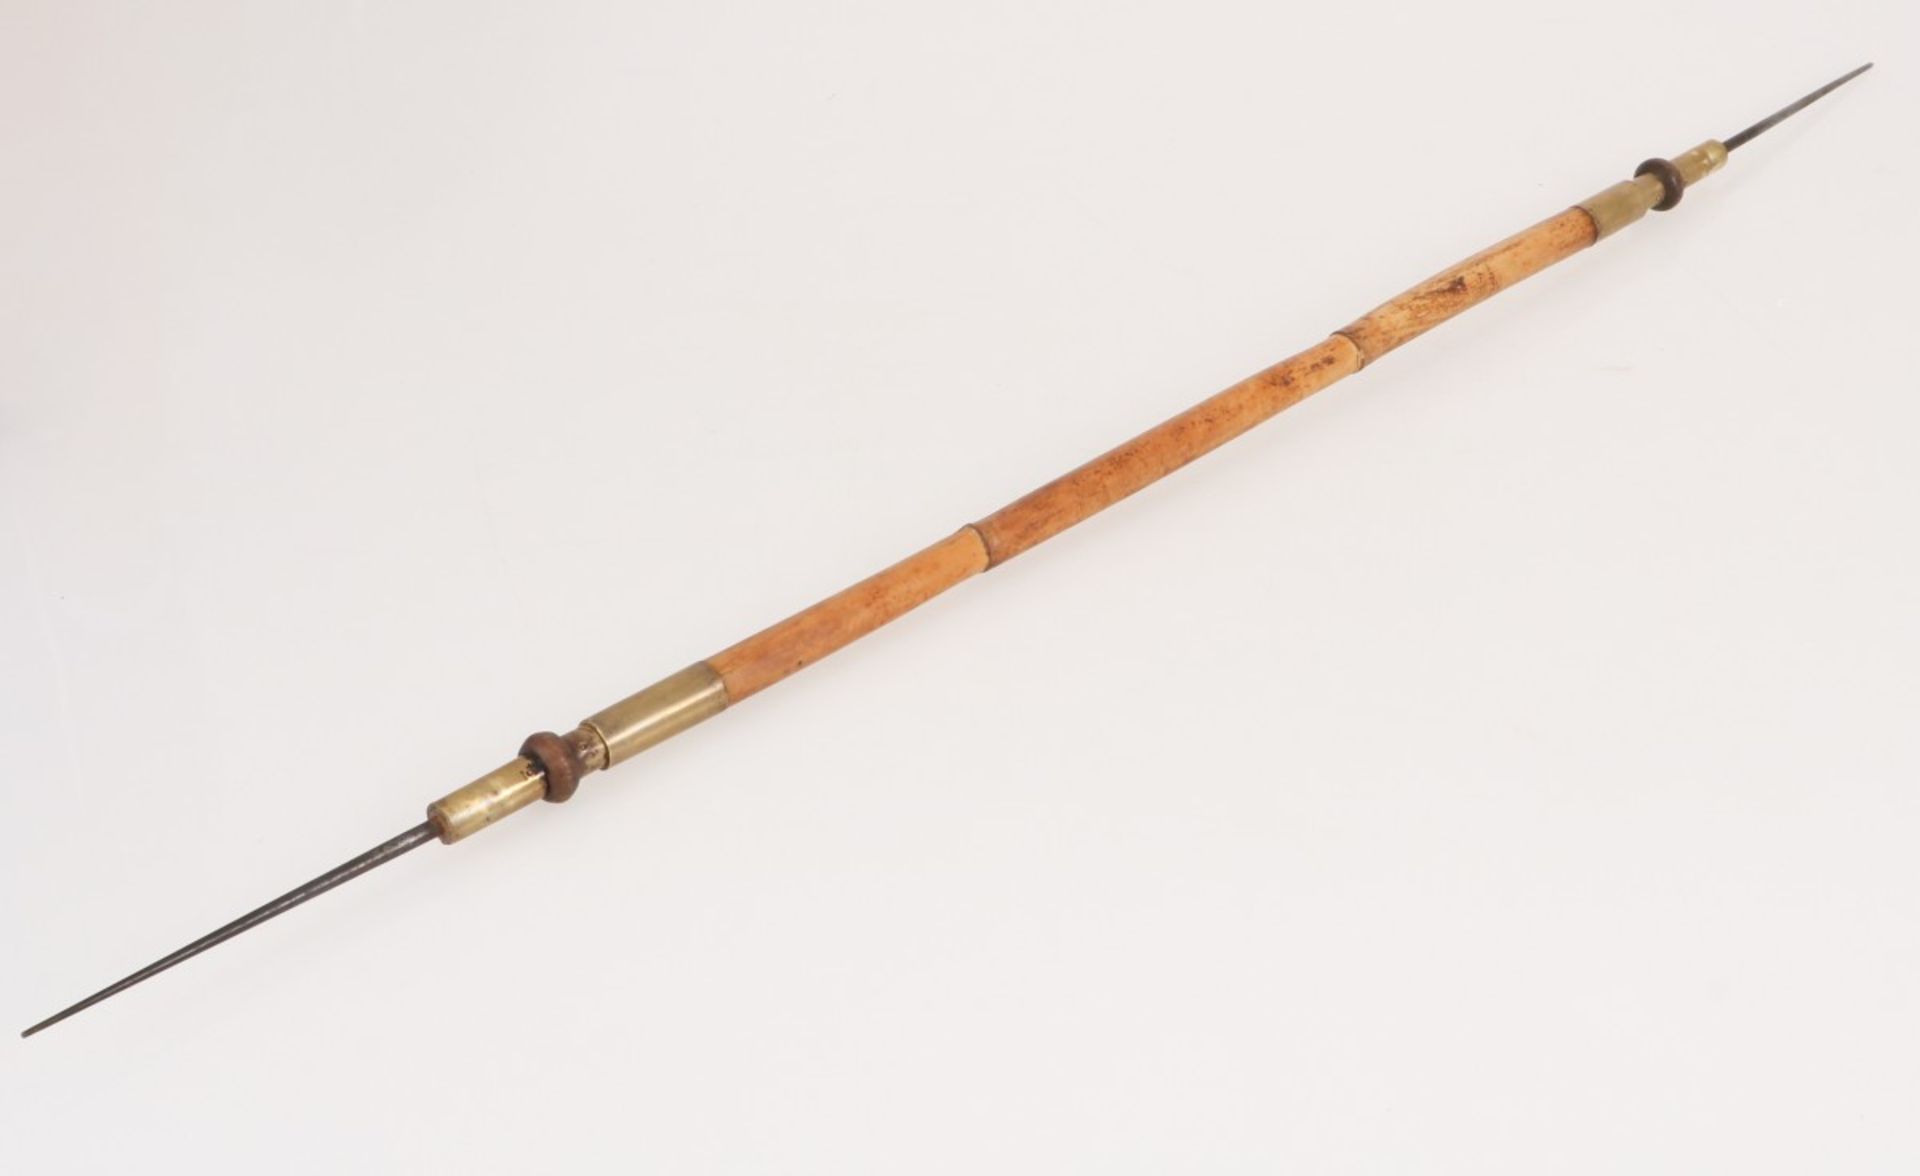 An Okinawan martial arts bamboo Japanese staff weapon, ca. 1950.